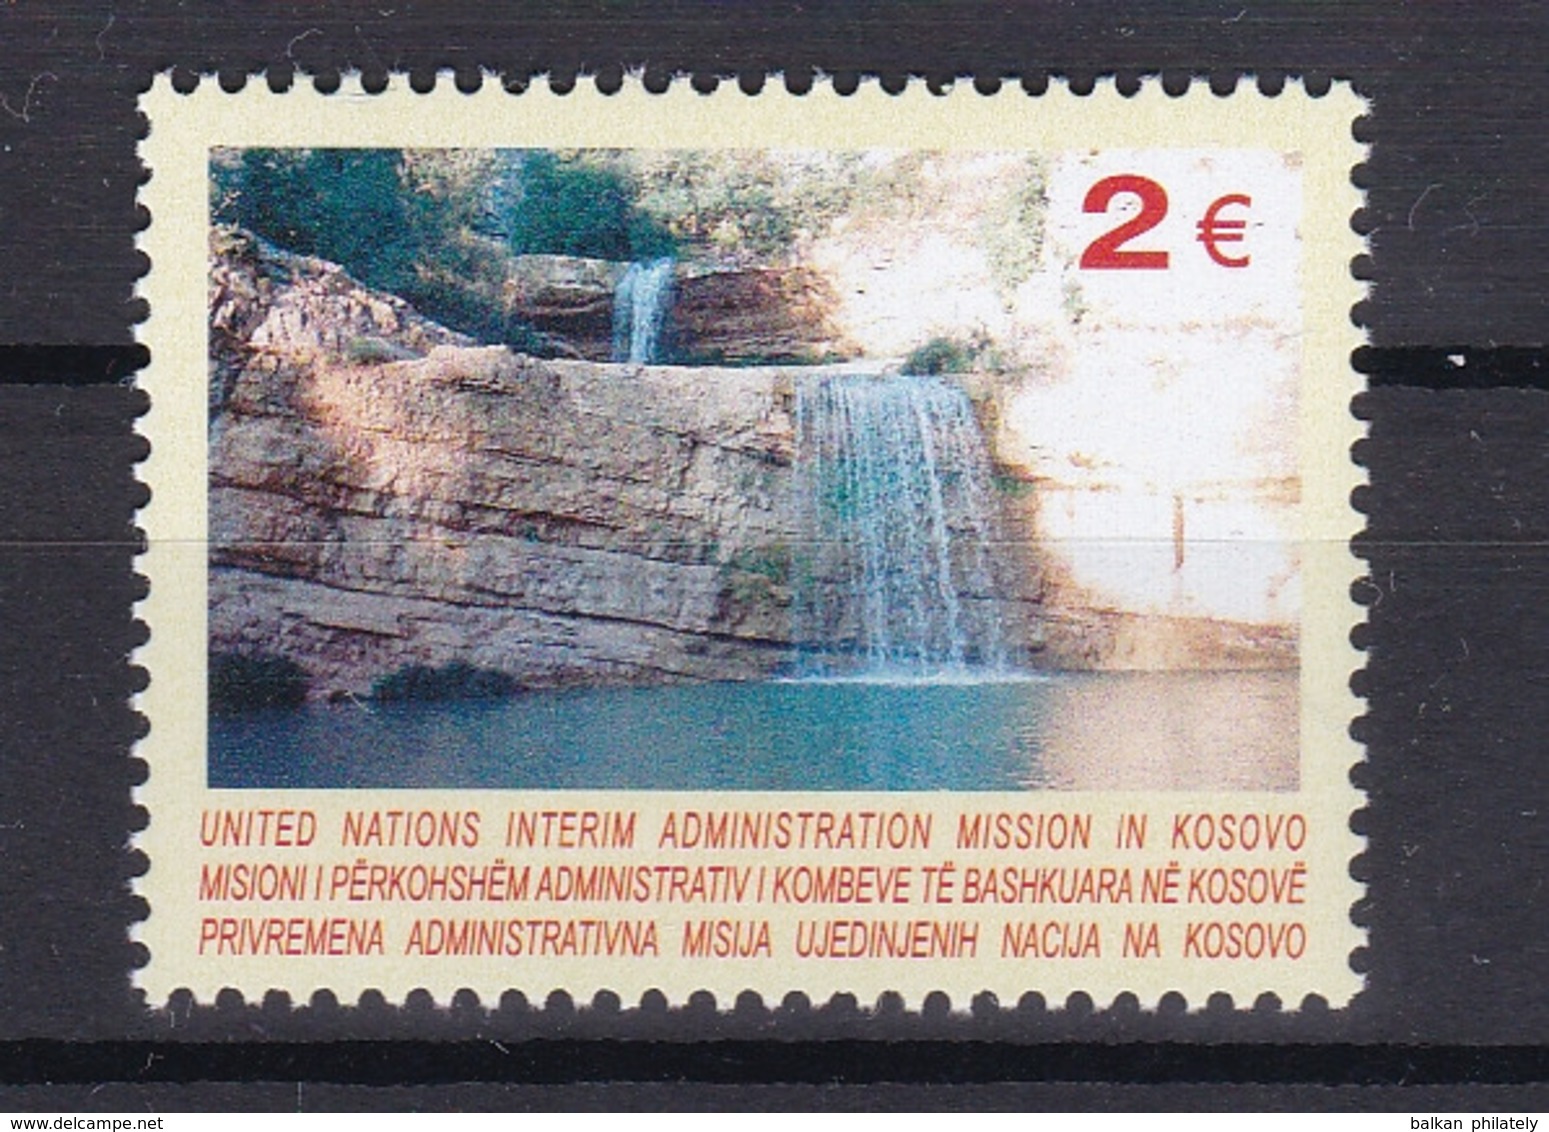 Kosovo 2004 Mirusha Waterfalls Landscapes Nature MNH - Kosovo